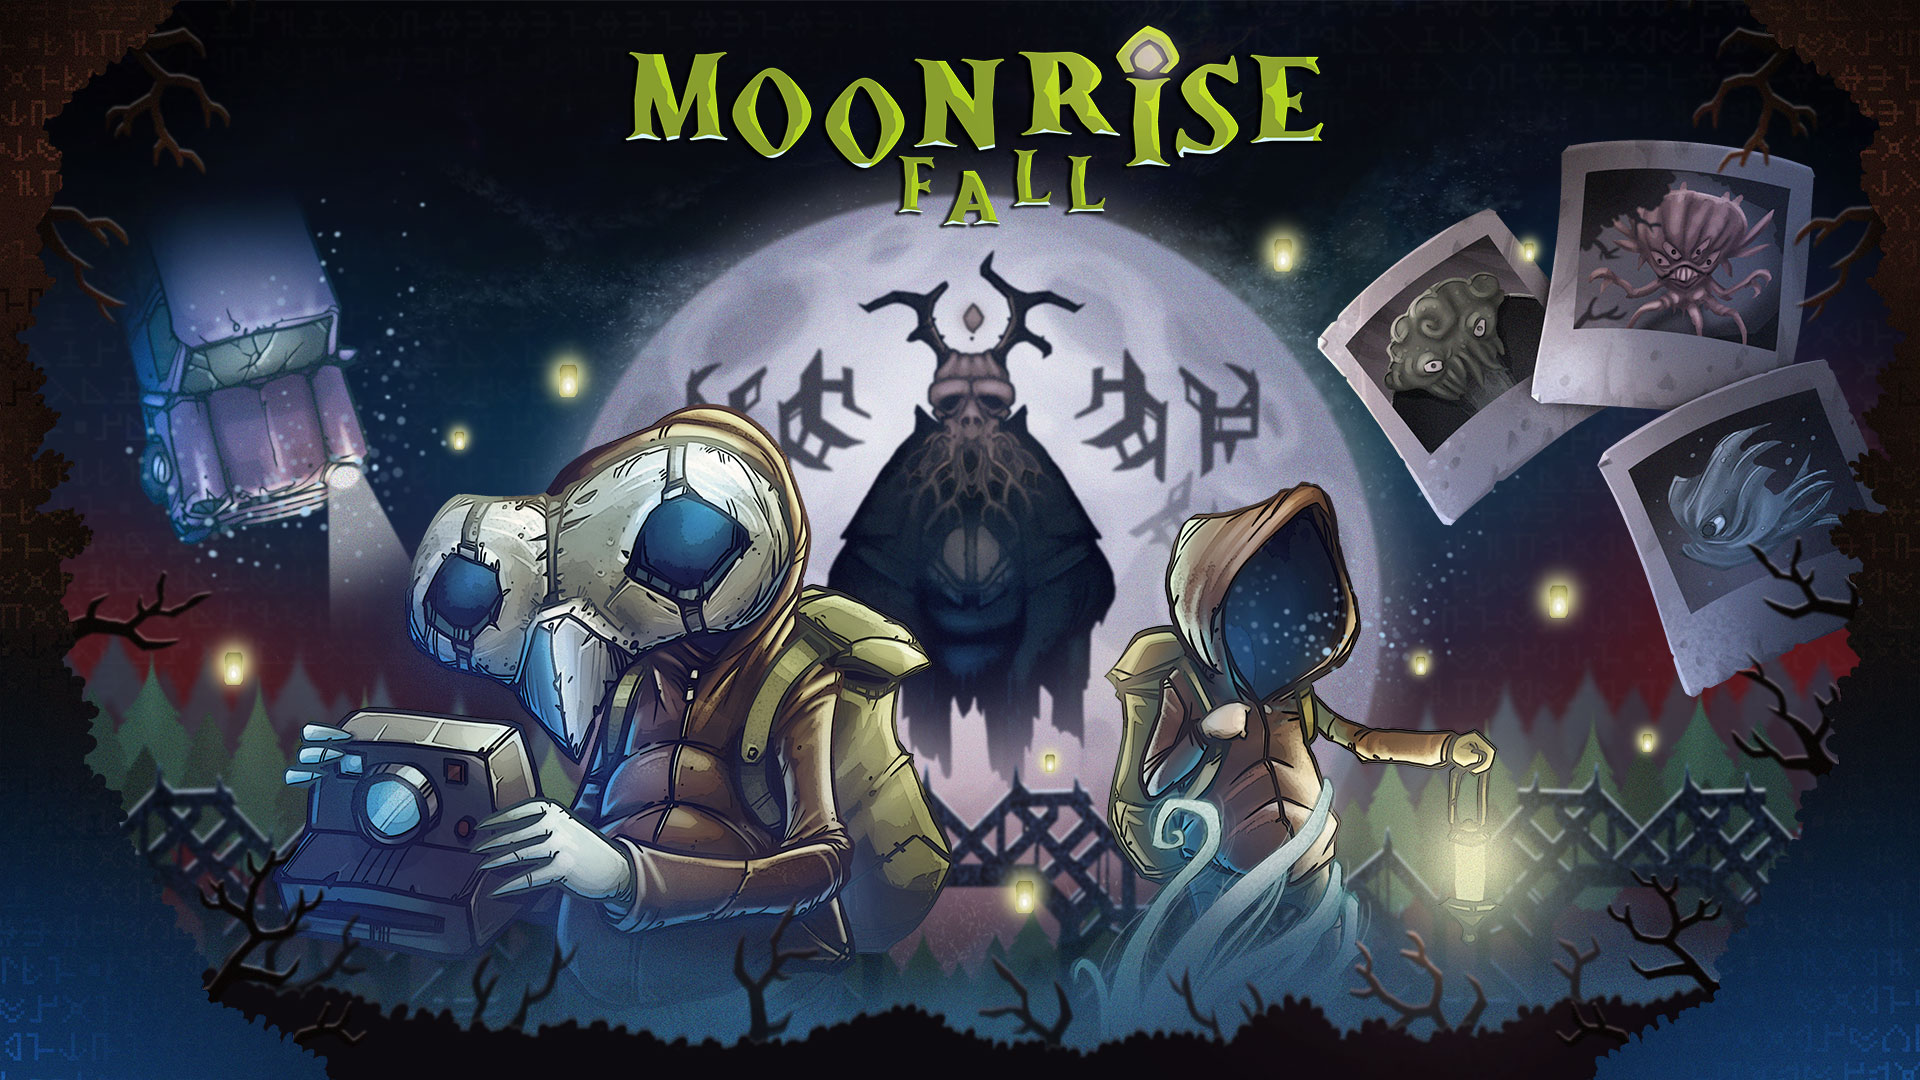 Moonrisefall titled key art